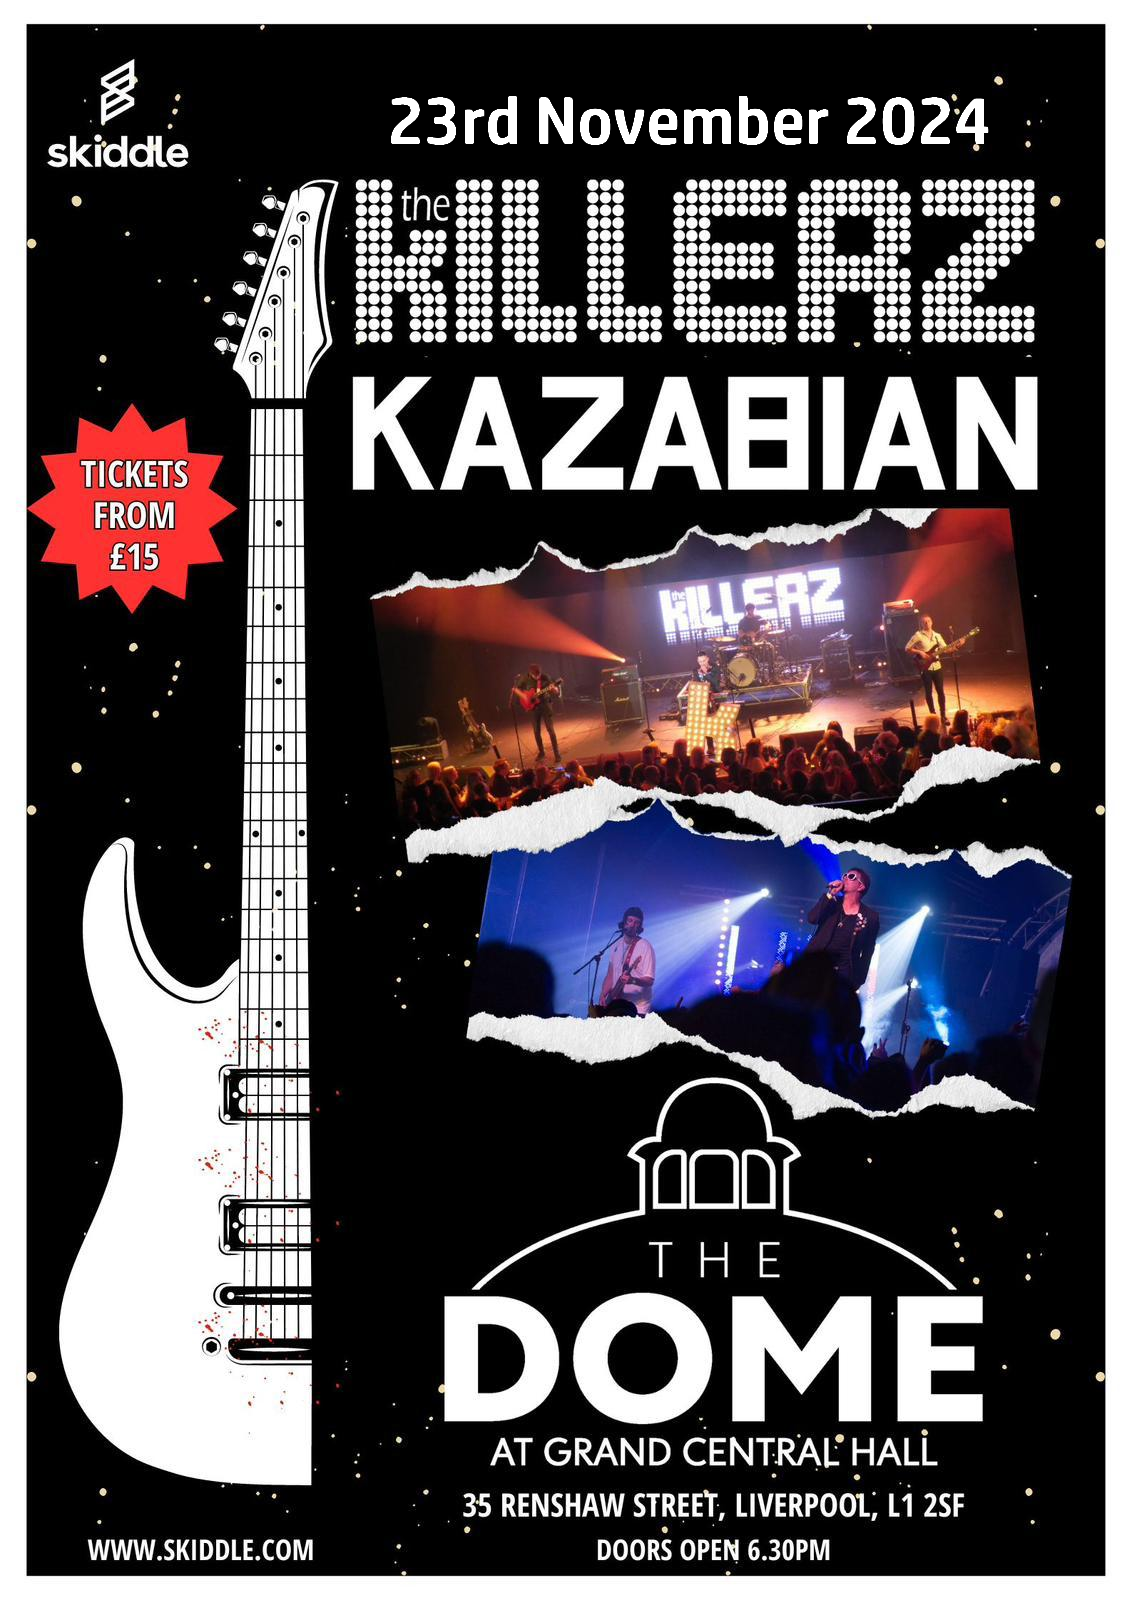 Kazabian @ The Dome - 23rd November 2024